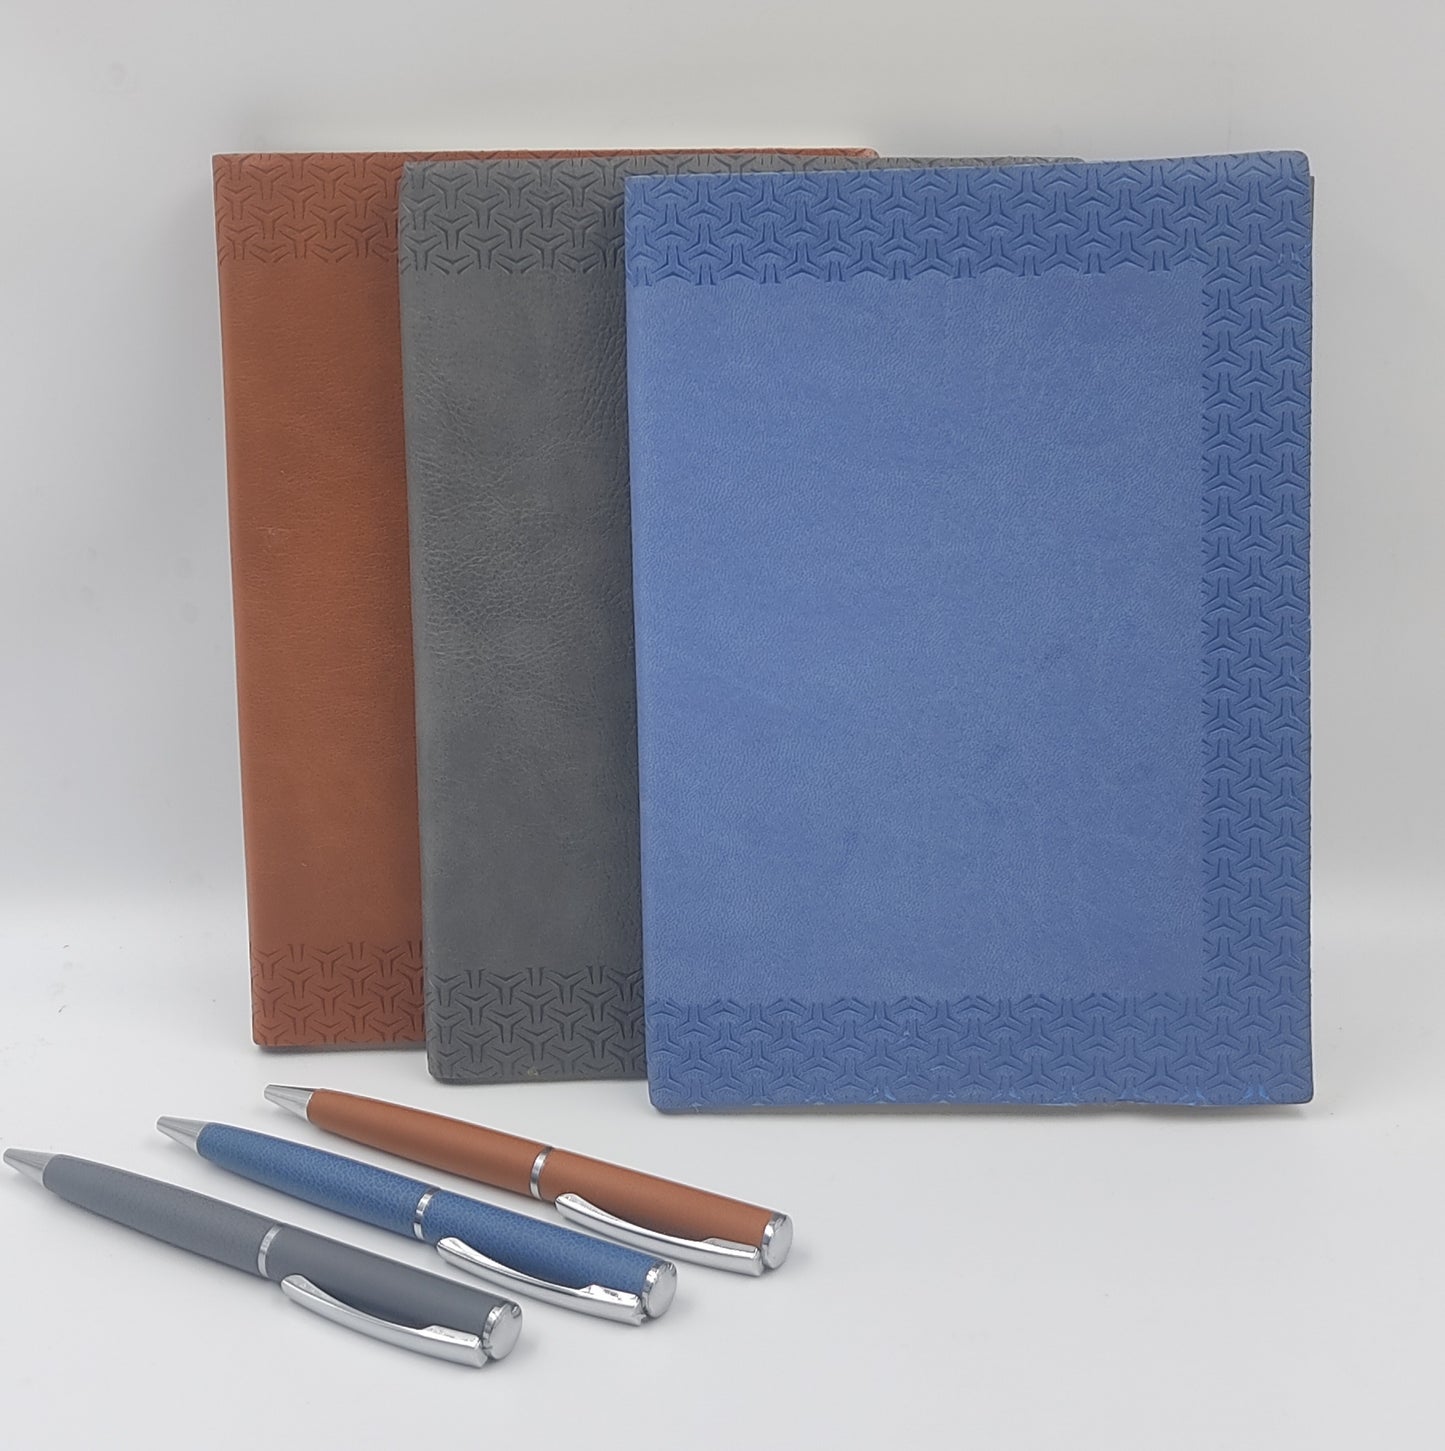 Rolex Notebook With Metal Texture Pen Gift Set In Premium Box